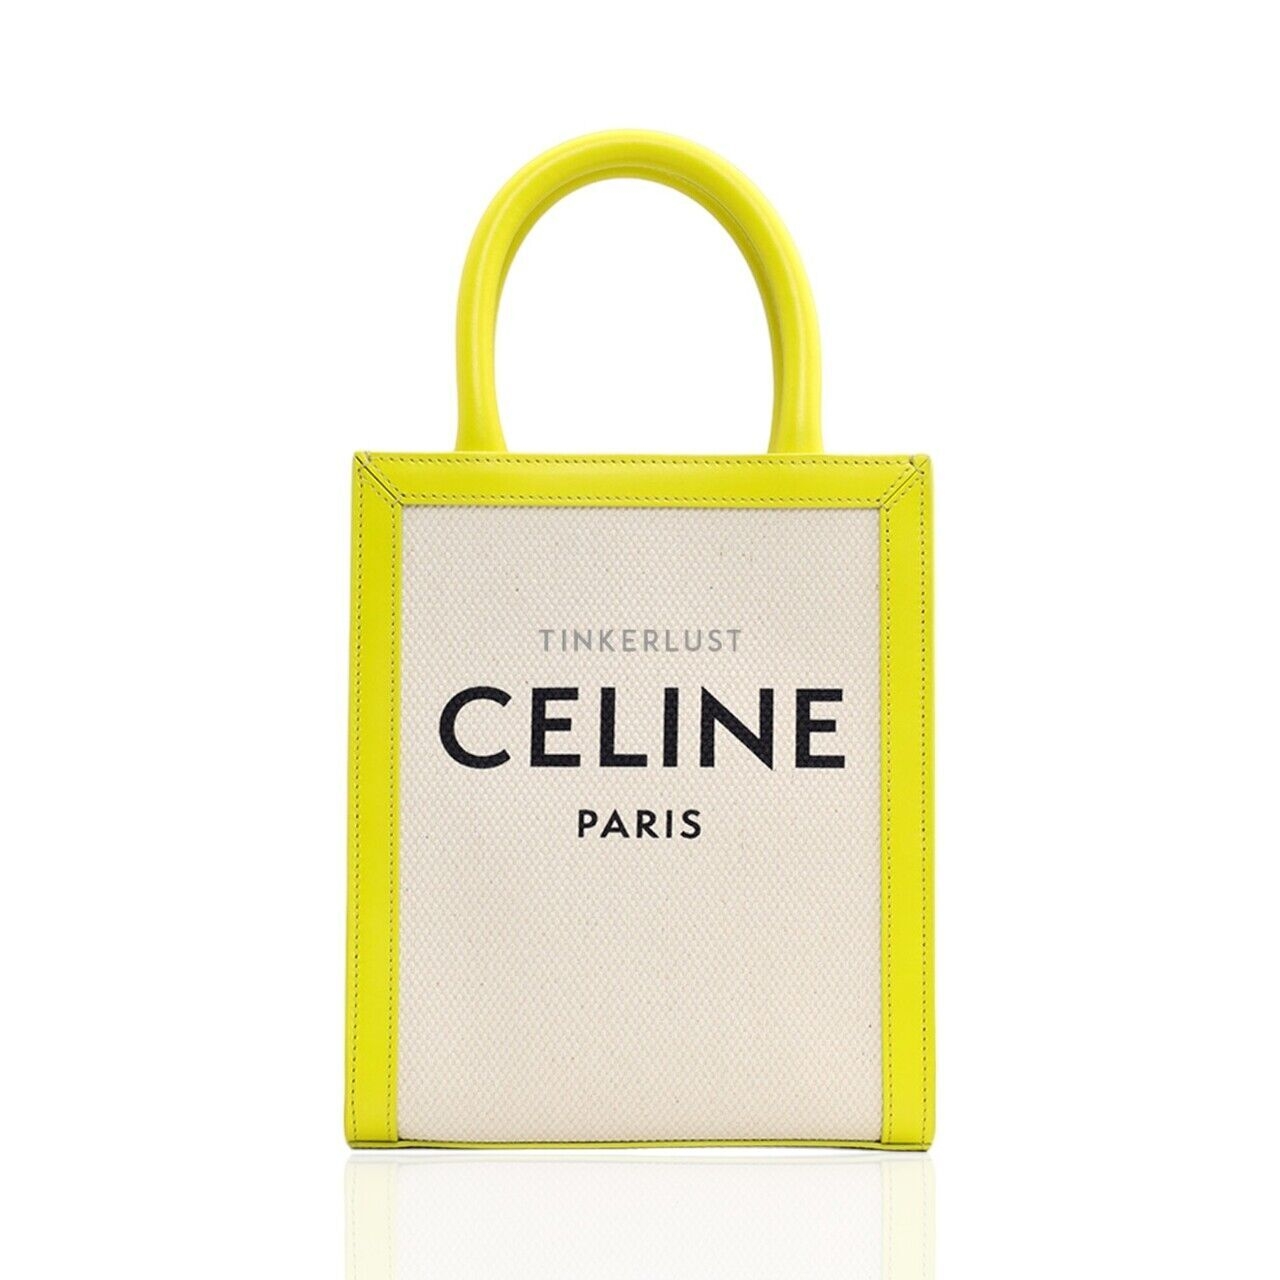 Celine Mini Vertical Cabas in Natural/Anis with Celine Print Satchel Bag